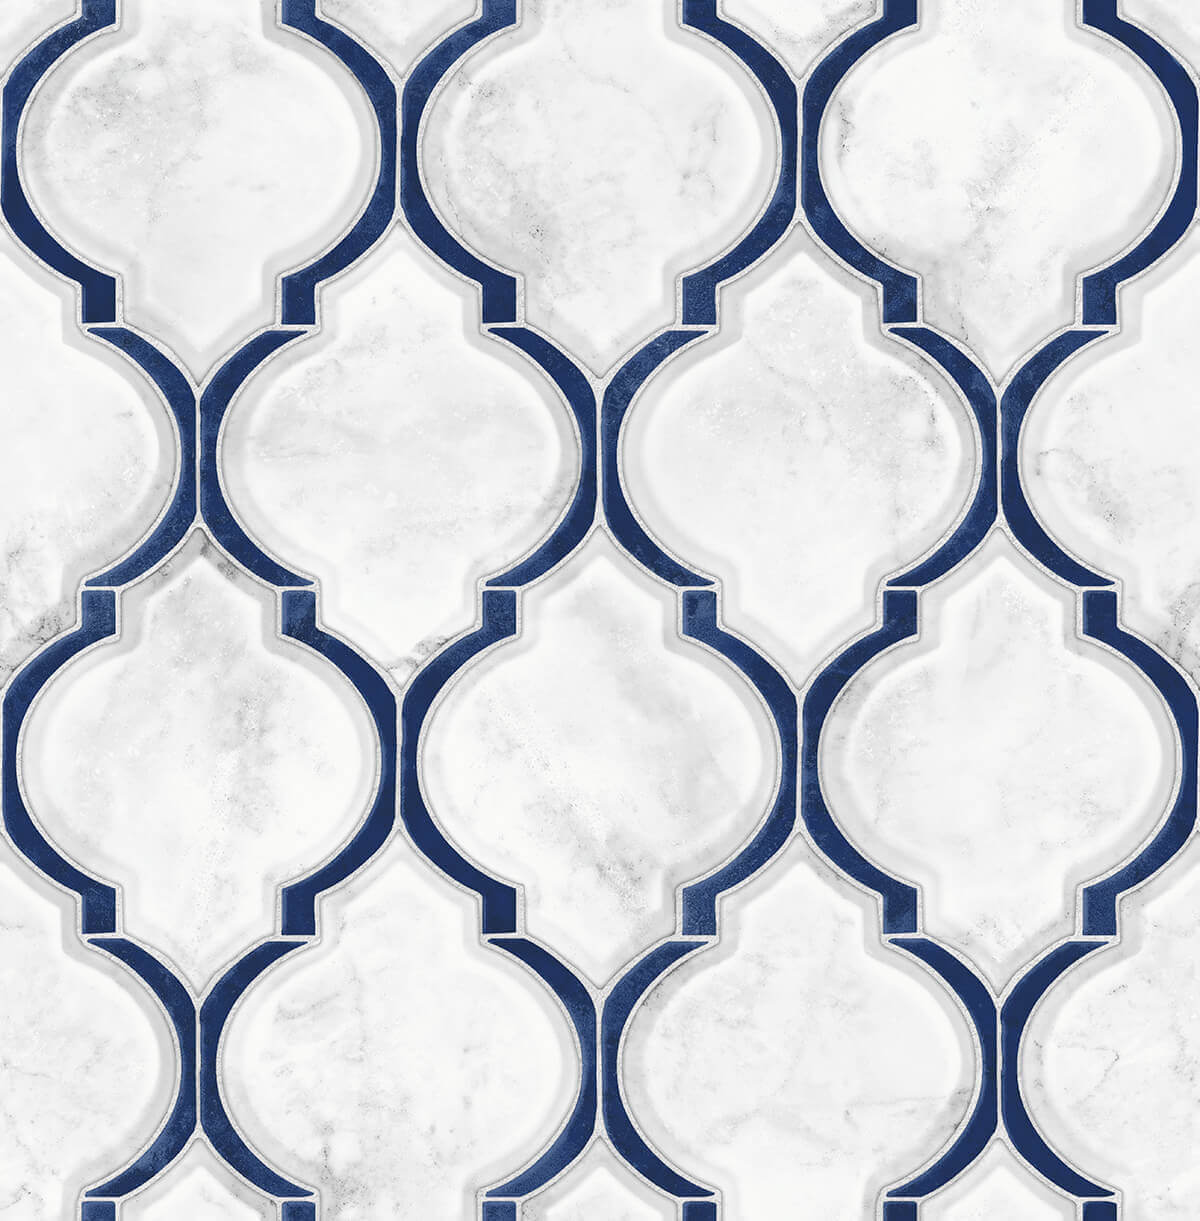 NextWall Marbled Ogee Peel & Stick Wallpaper - Blue